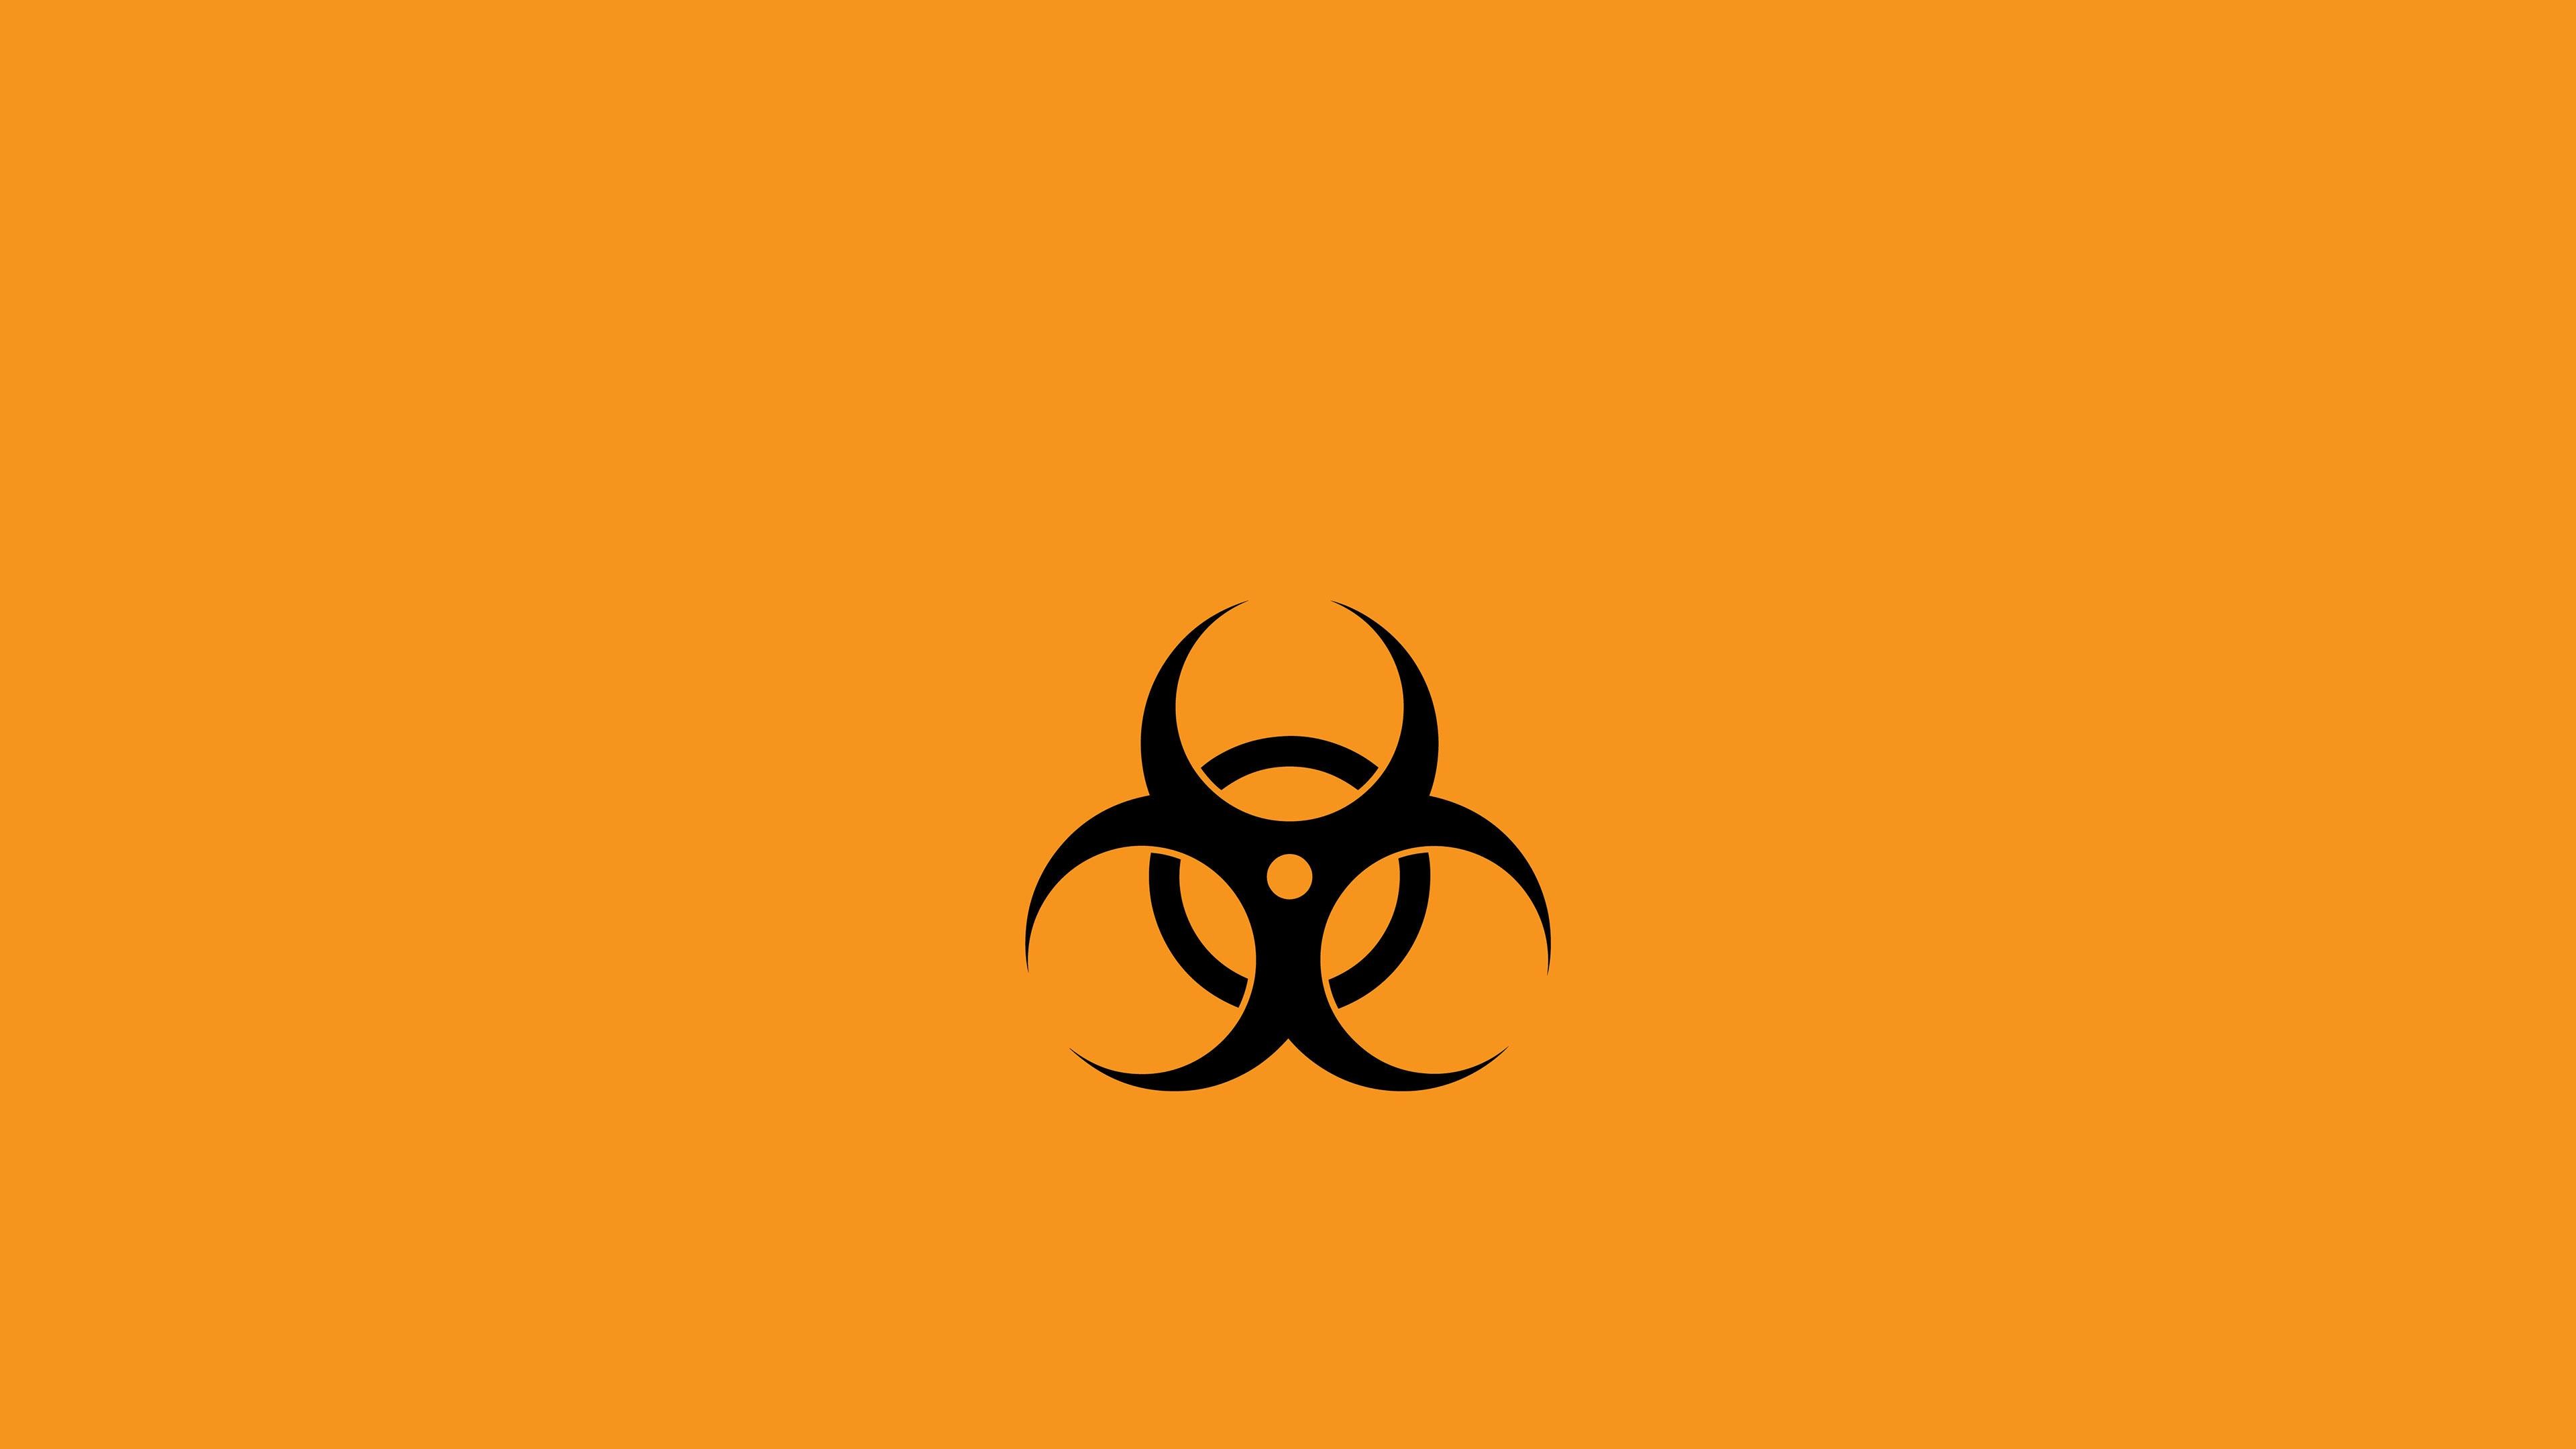 3840x2160 HD Orange and black biohazard sign Wallpaper